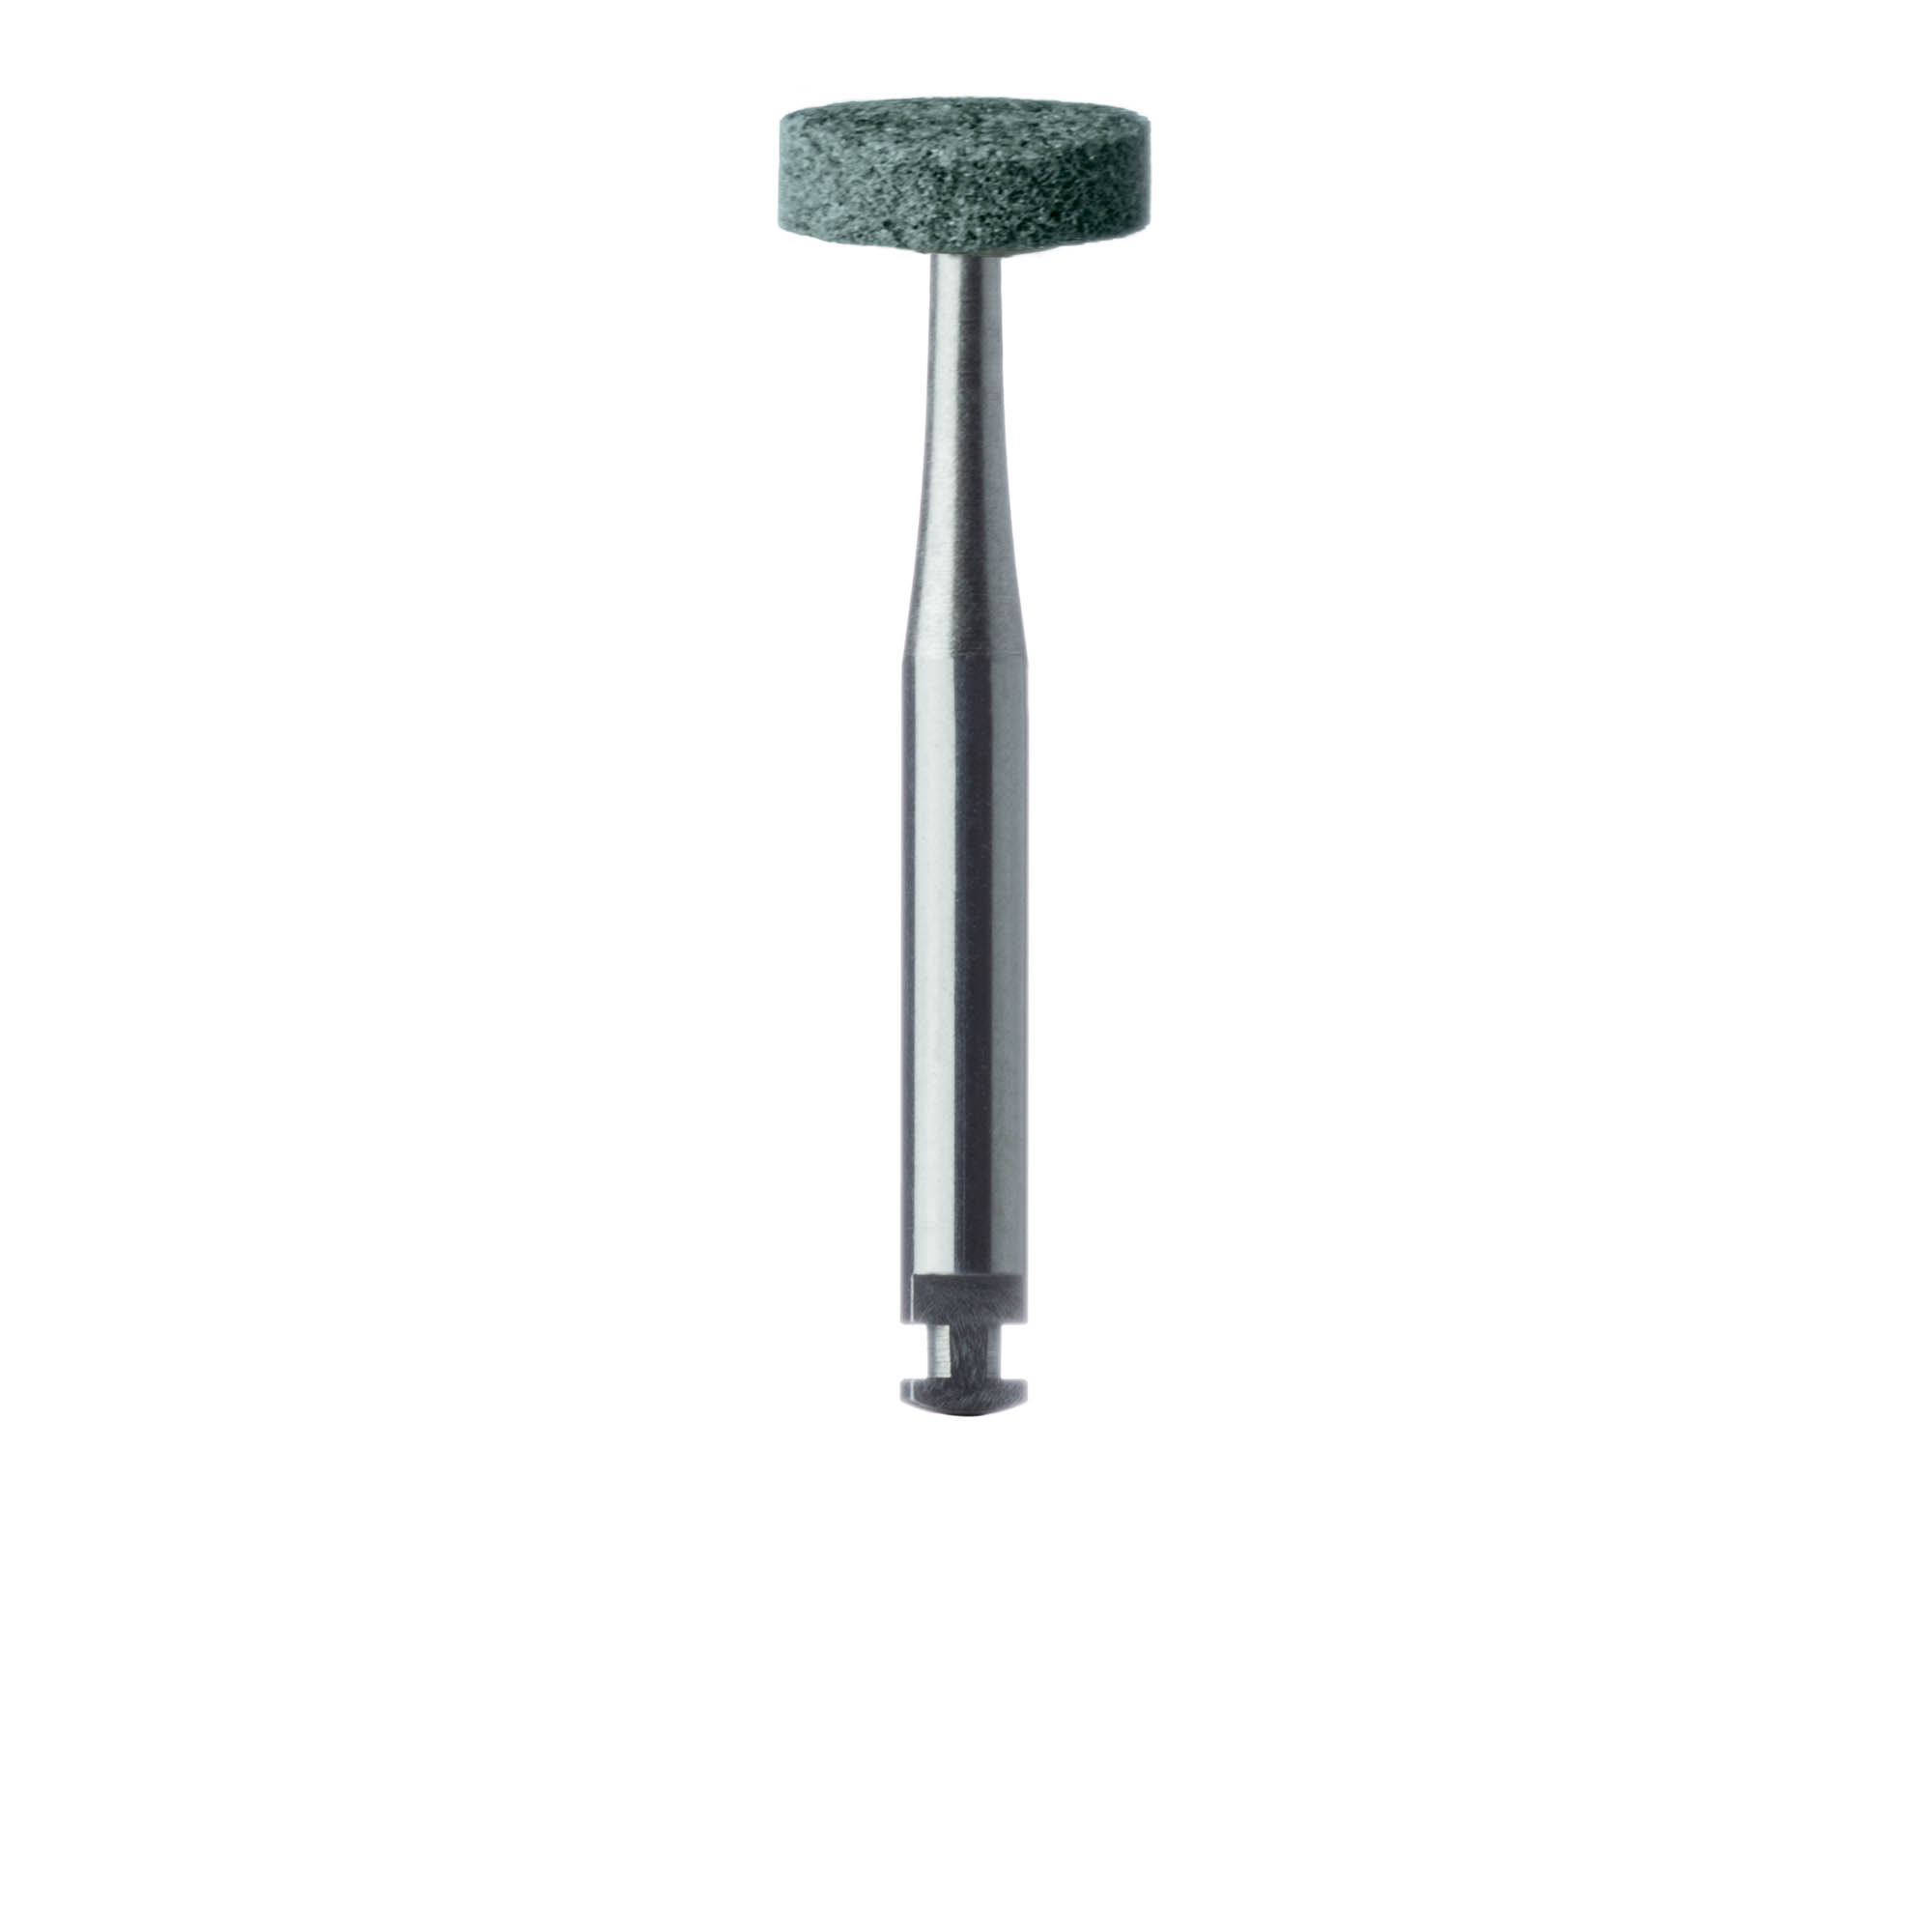 622-065-RA-GRN Abrasive, Green, Medium, 6.5mm Ø, RA